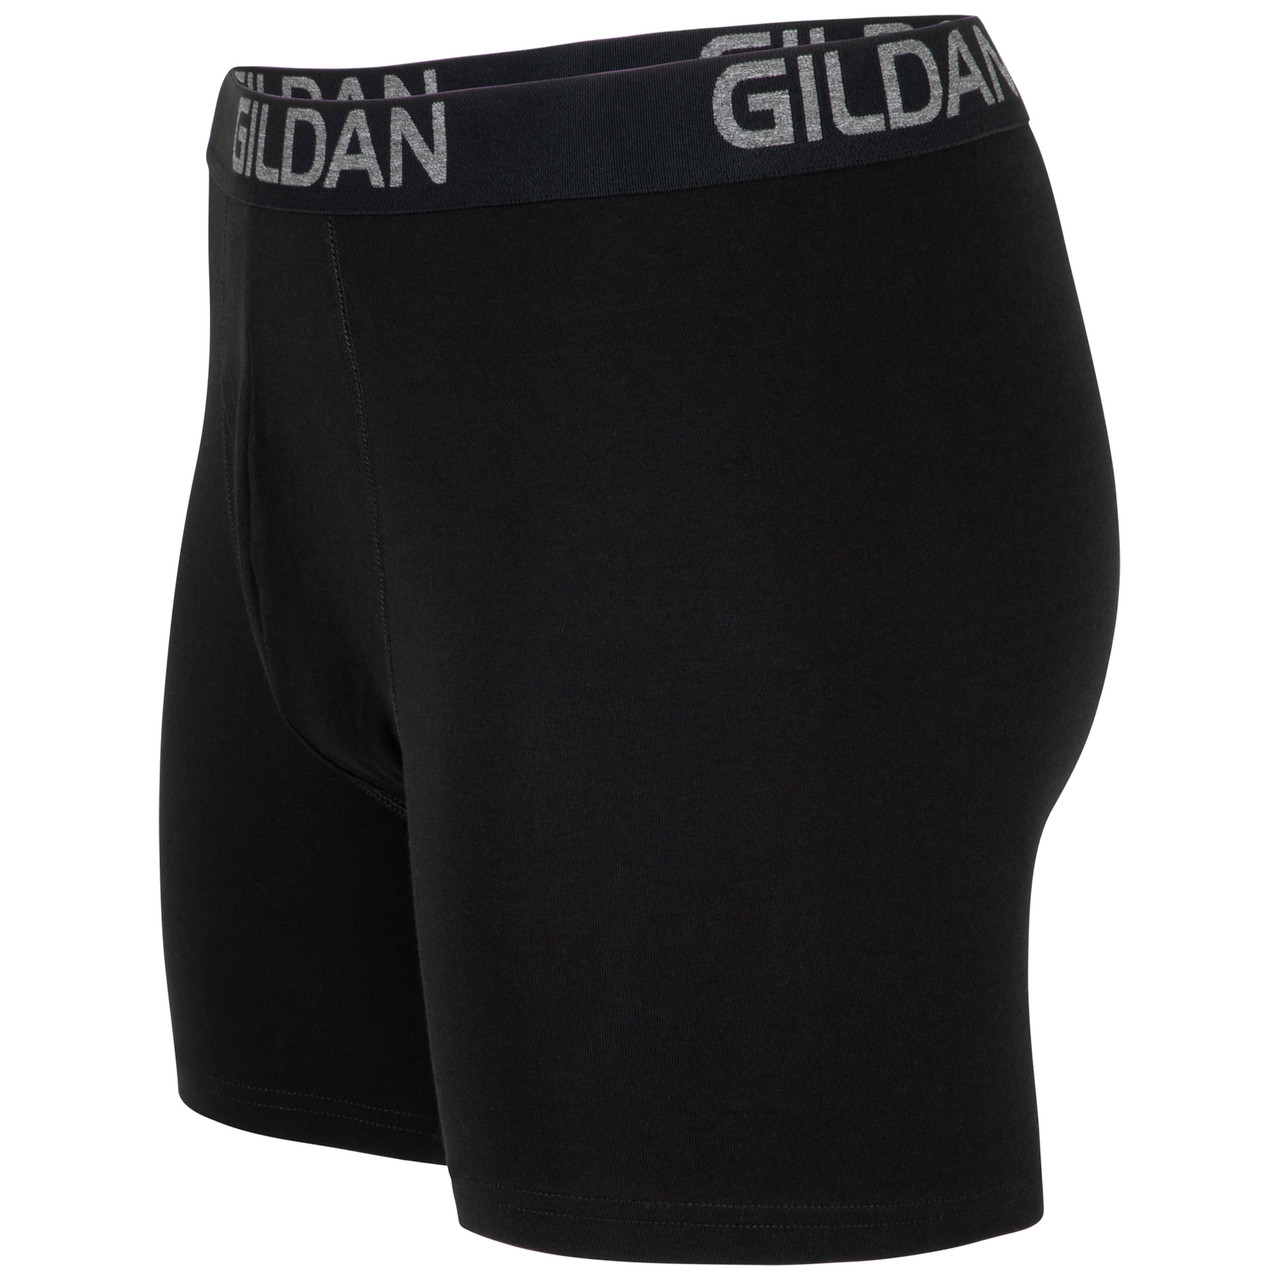 Gildan Men's Active Polyester Boxer Briefs, 2-Pack, Black/Royal